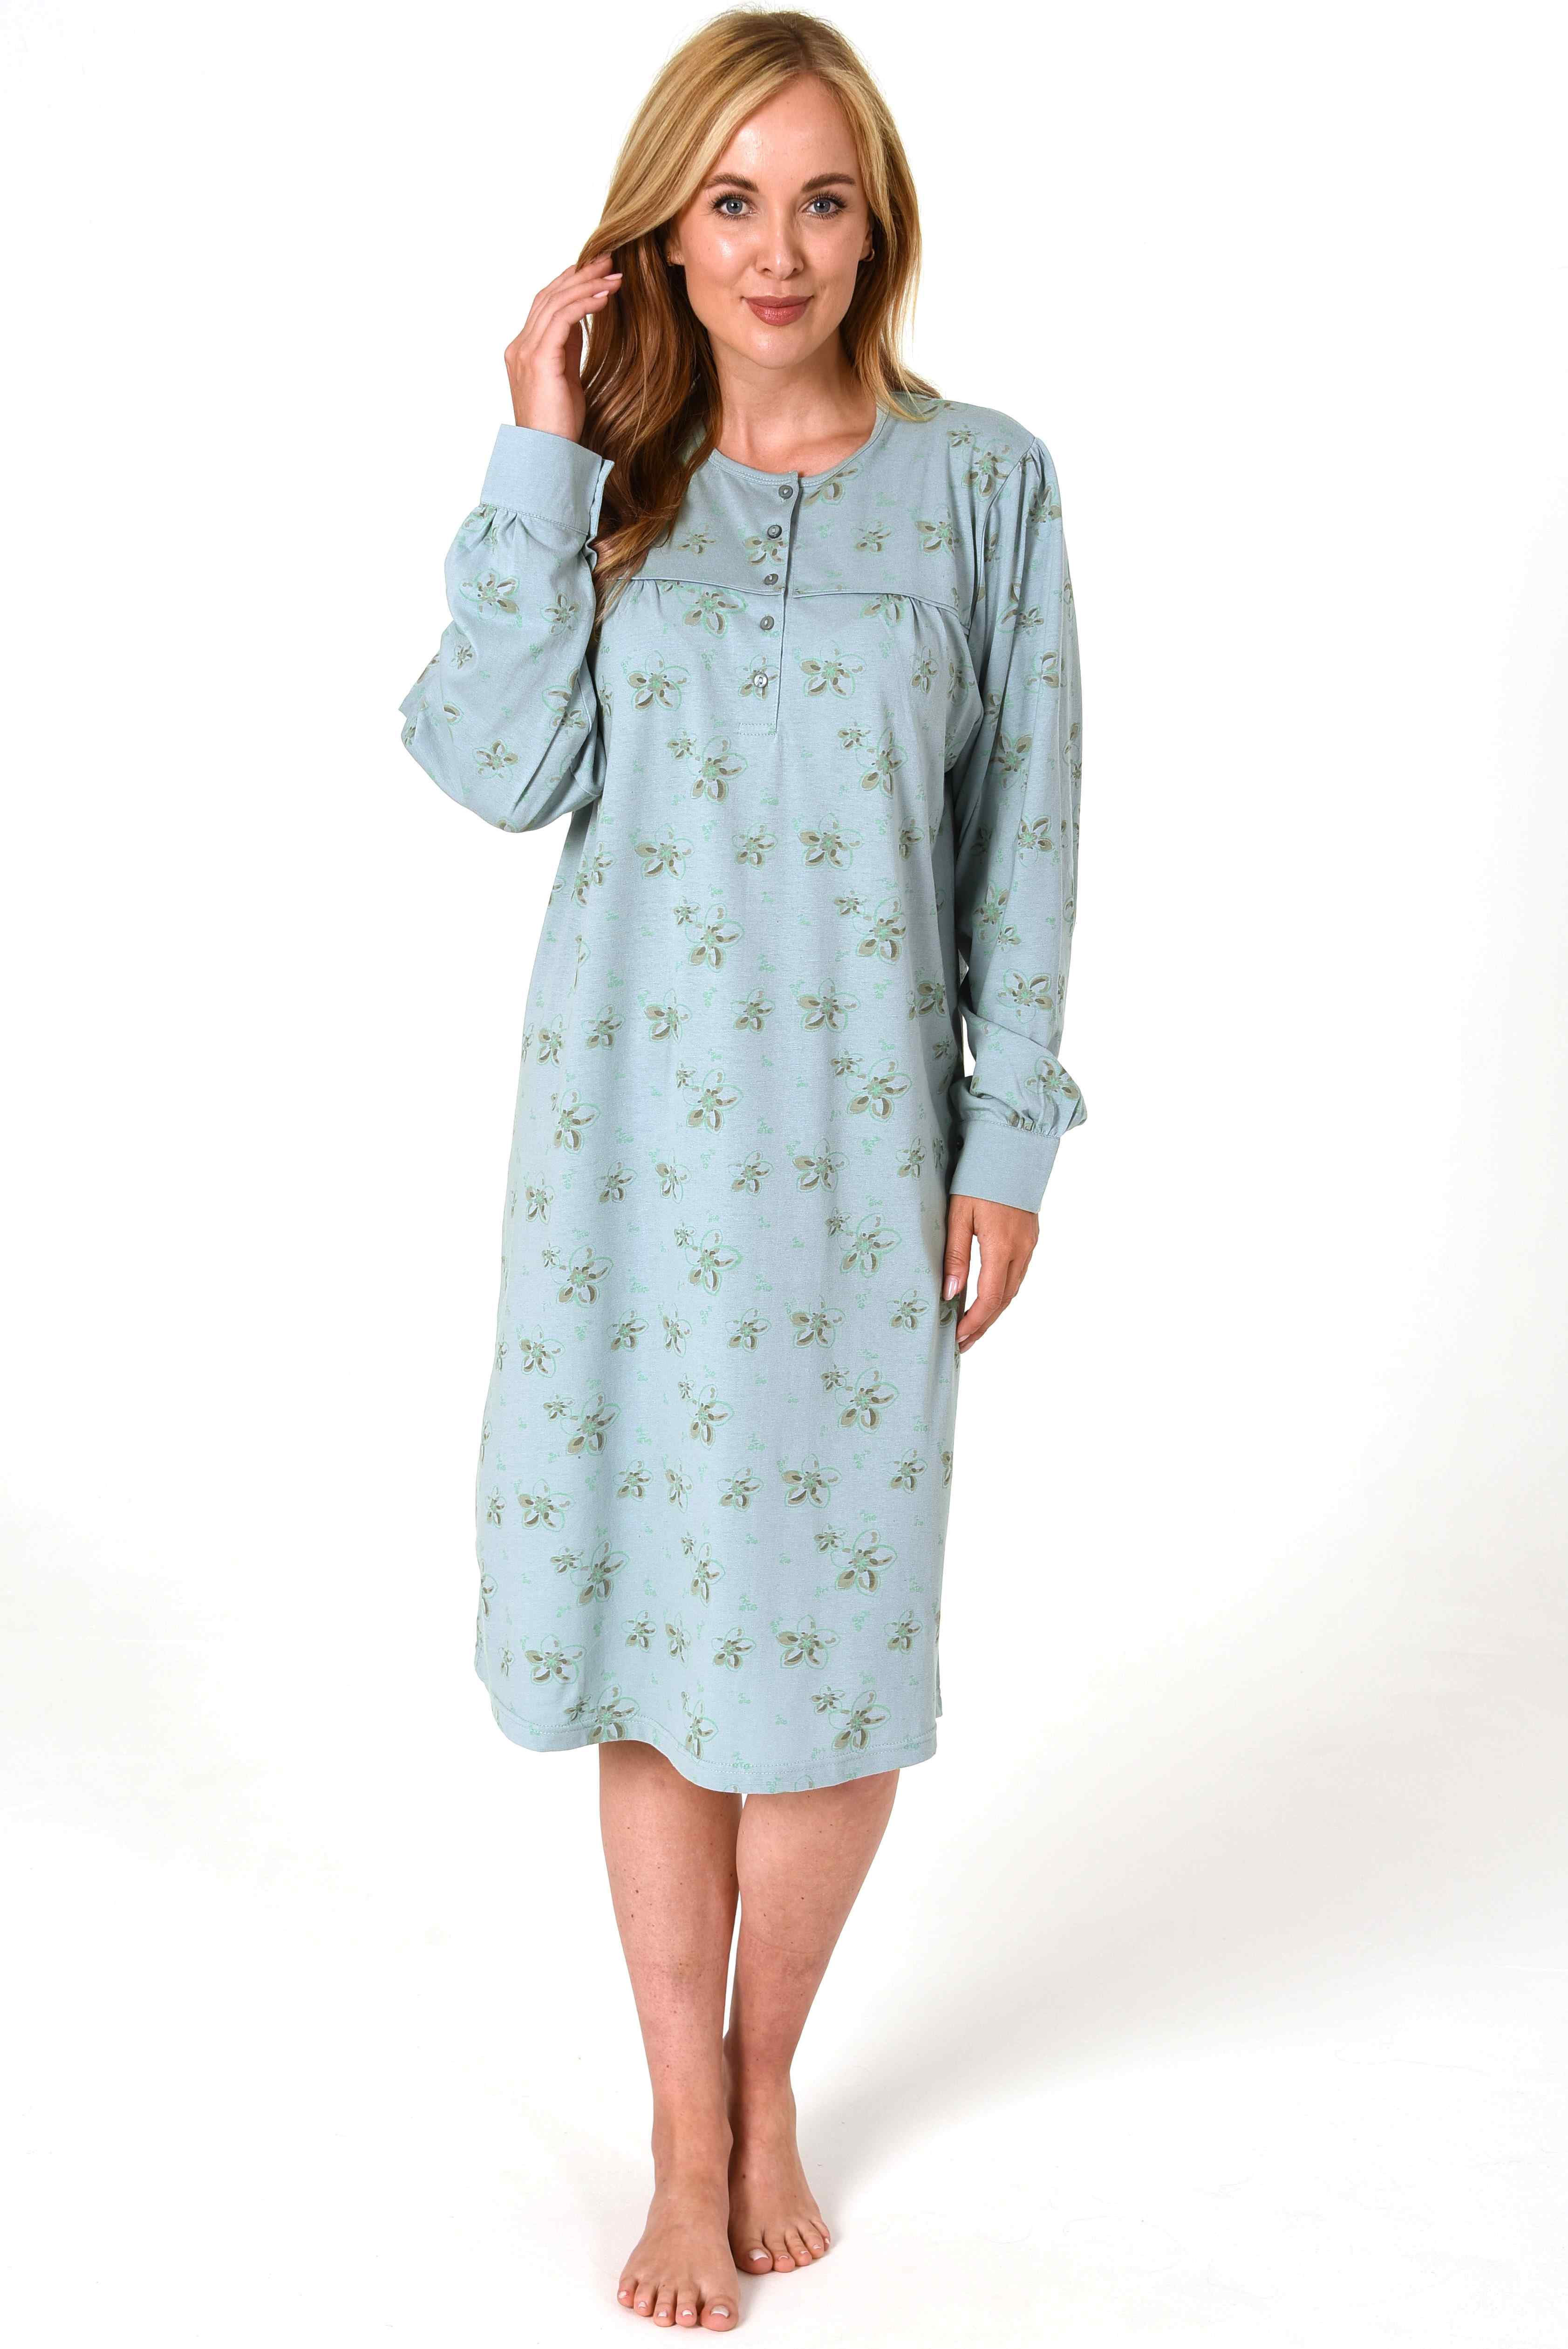 normann dames nachthemd Jeanette 68135 - Groen - L 44/46